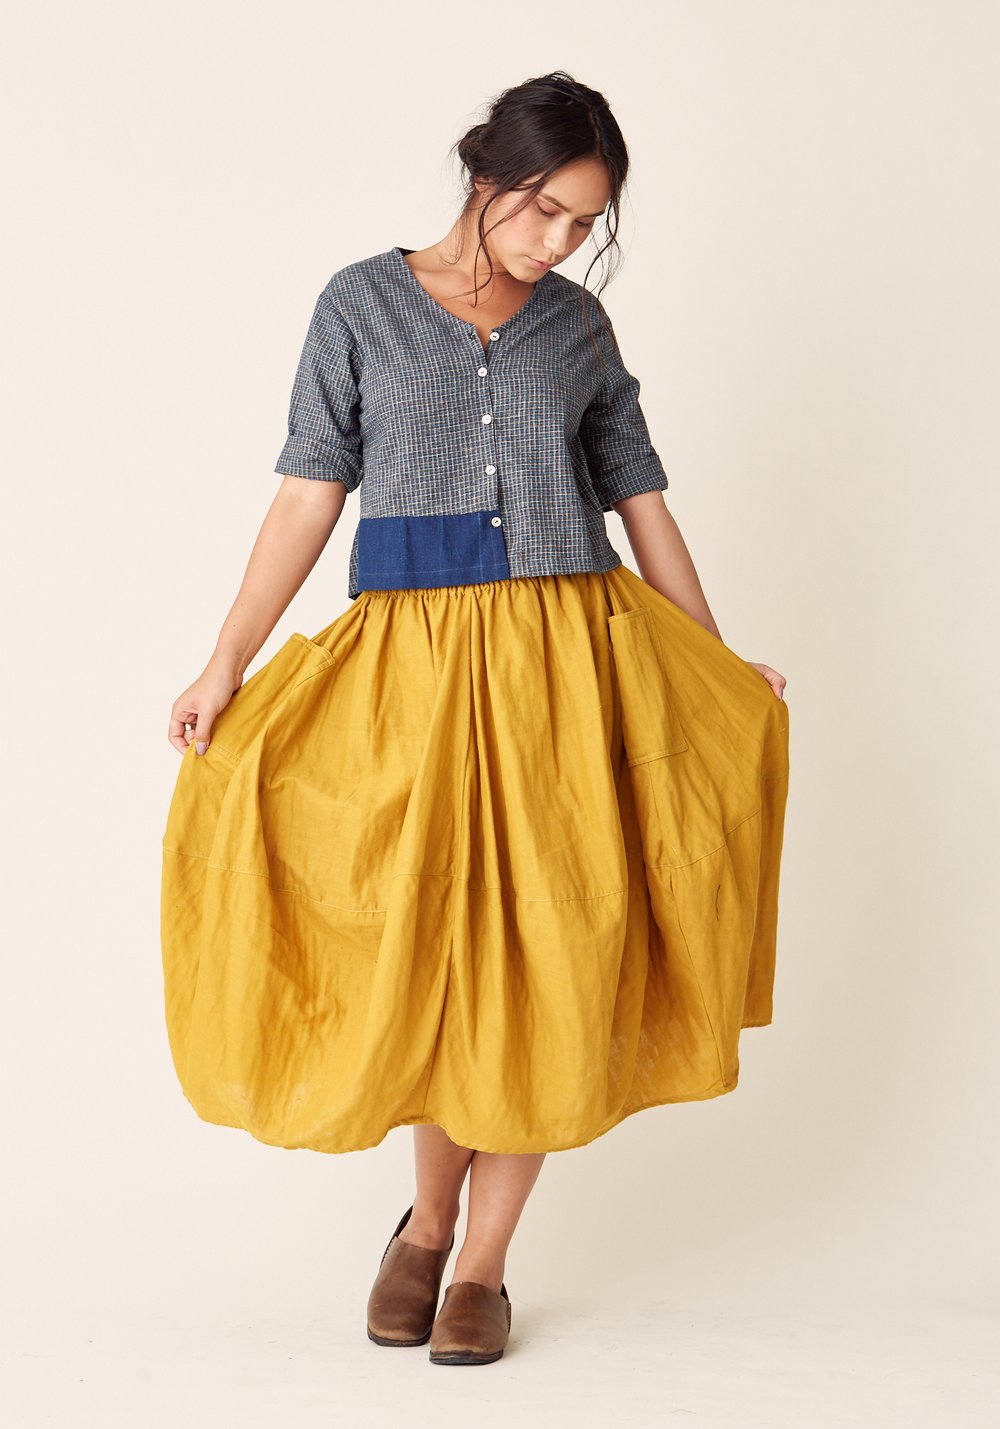 April Skirt Pattern